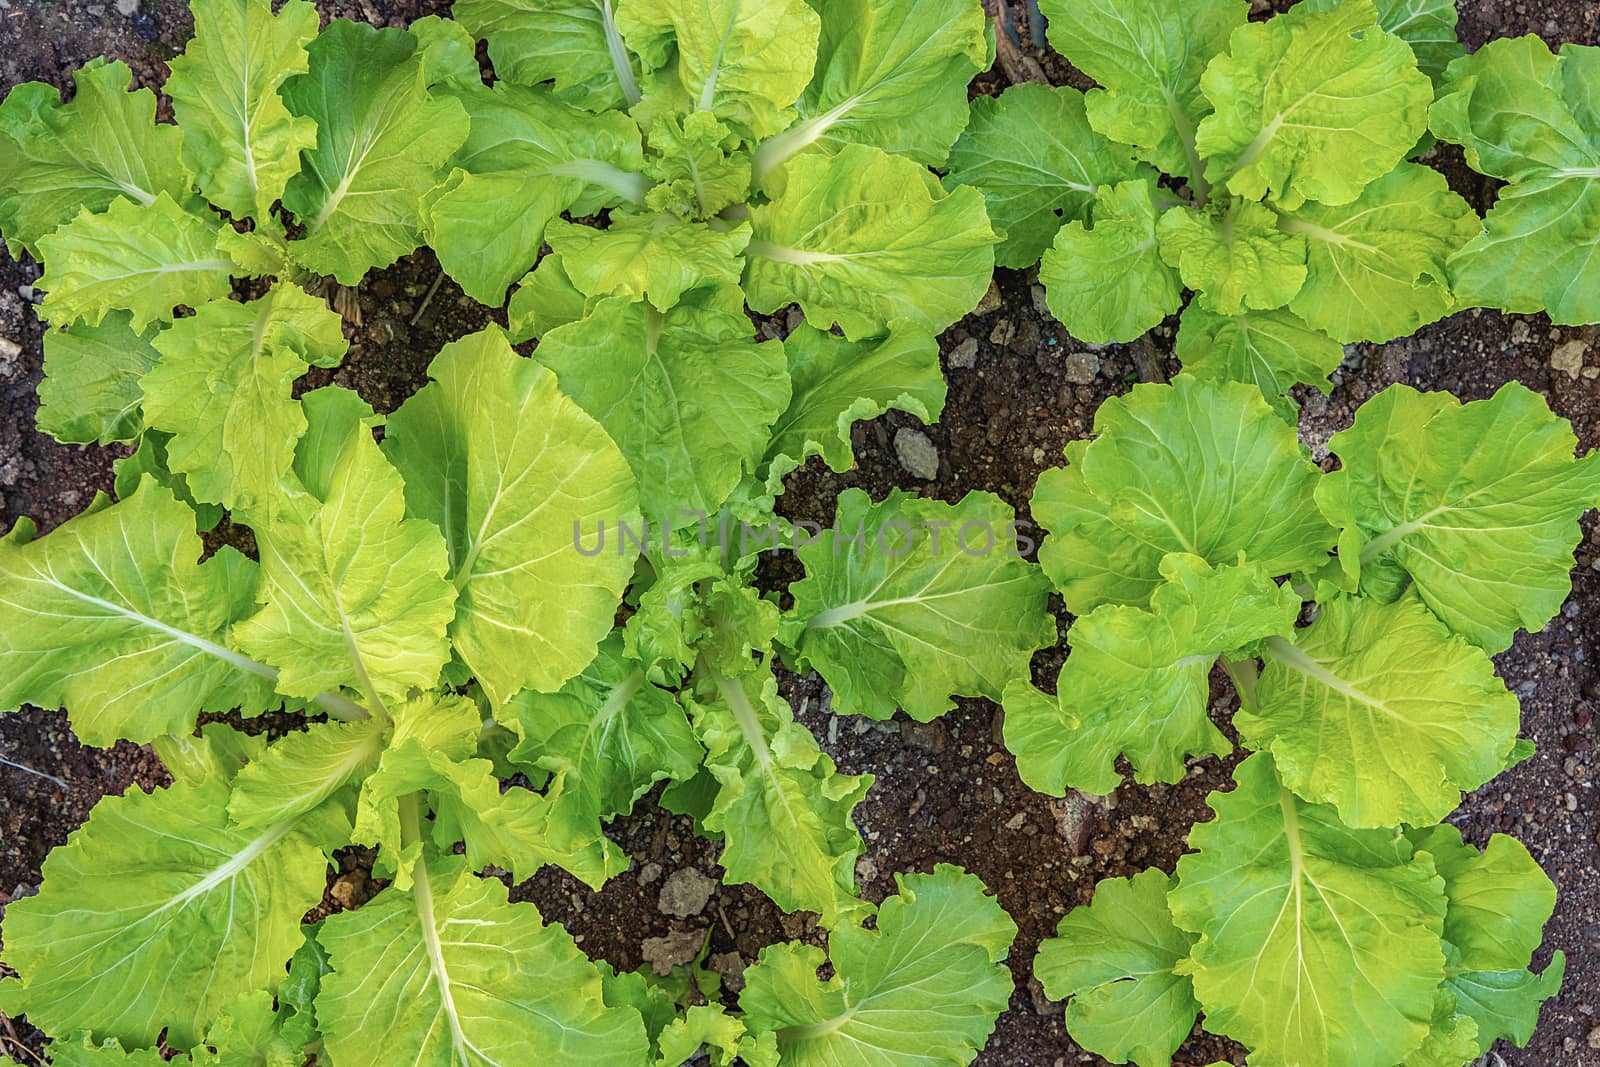 Group of lettuce planted in soil